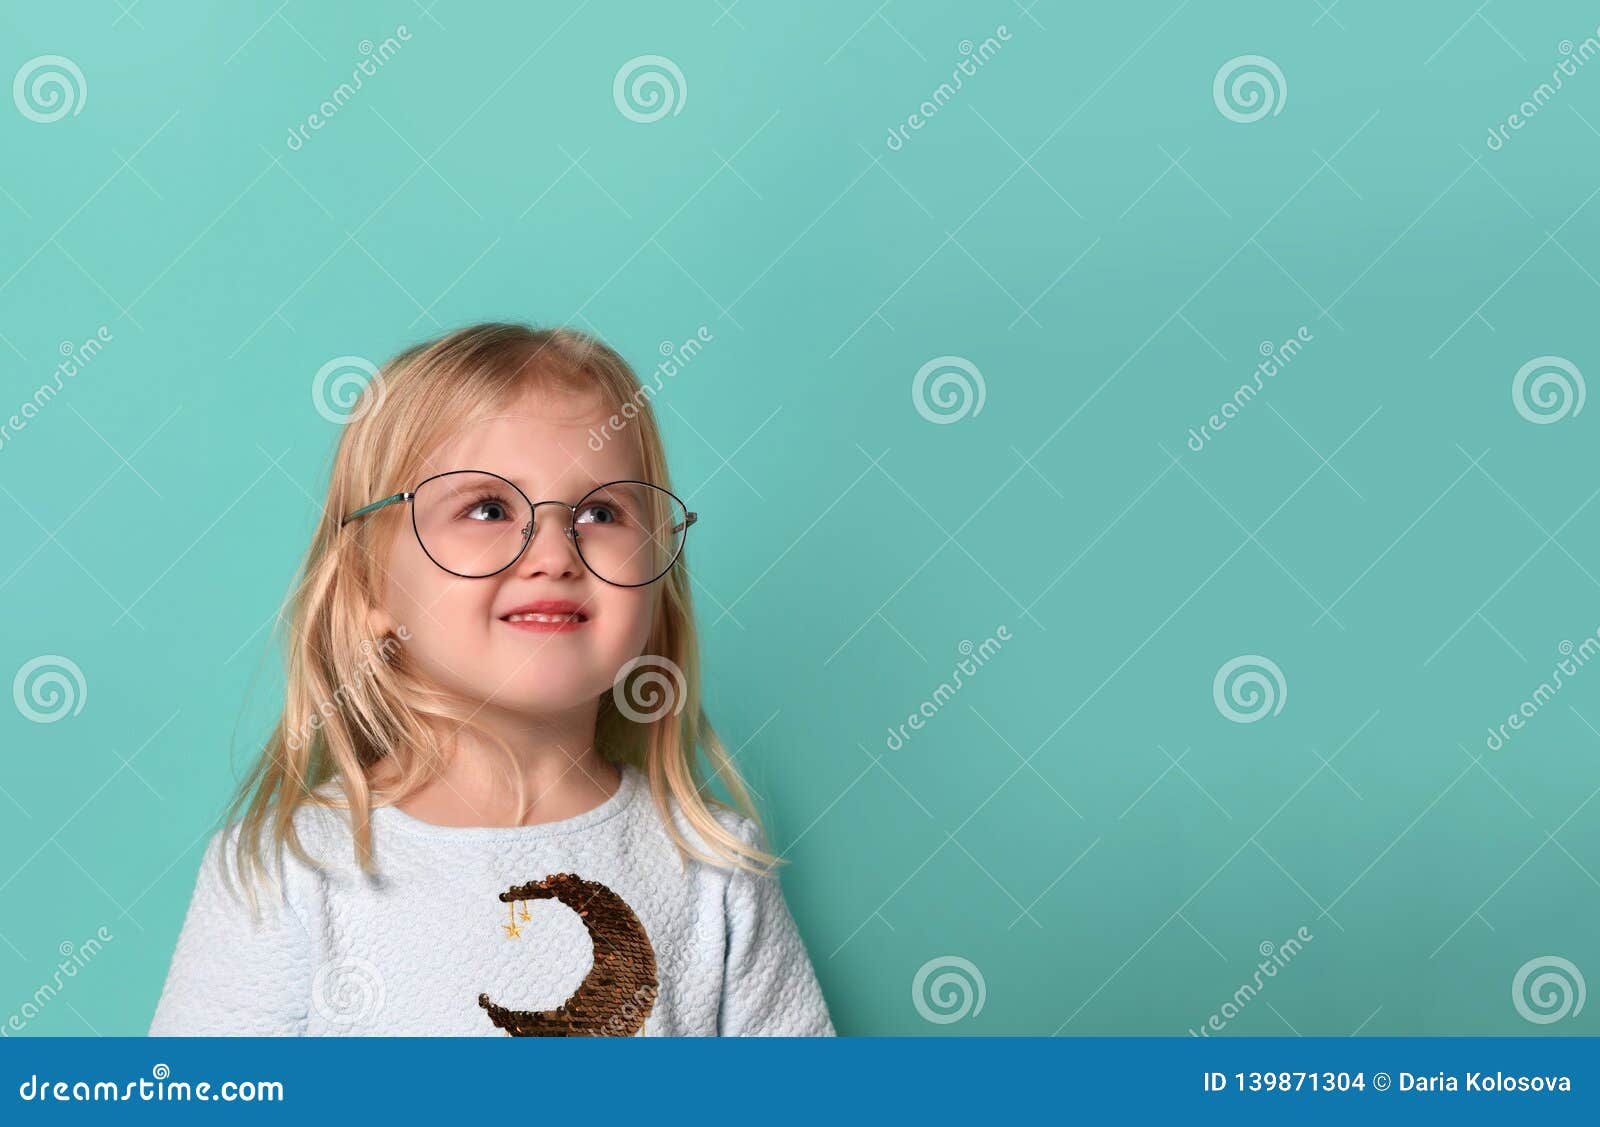 Thinking Kid Girl In Glasses Looking Happy Closeup Instagram